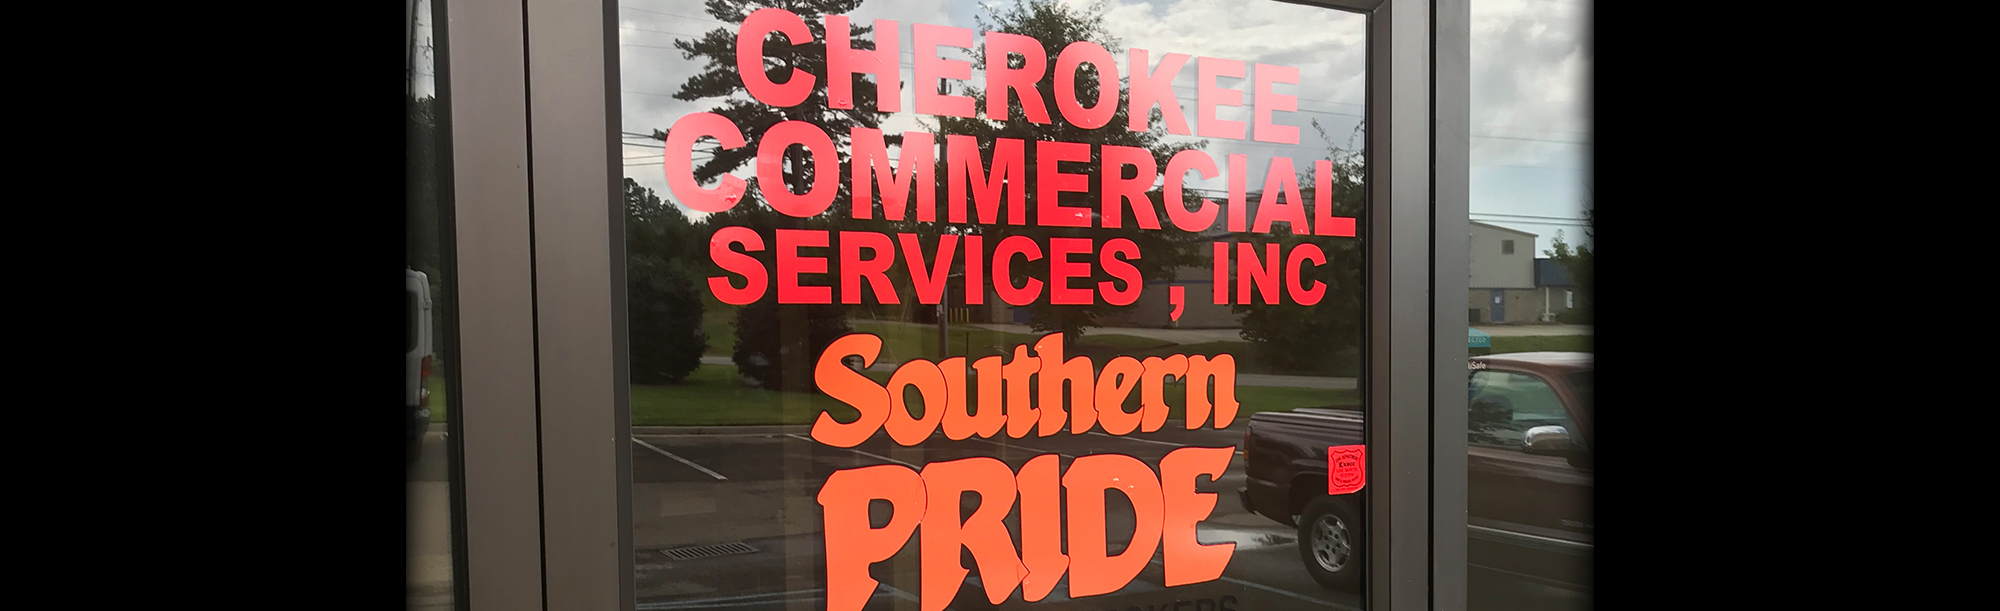 Cherokee Commercial Services in Canton, Georgia